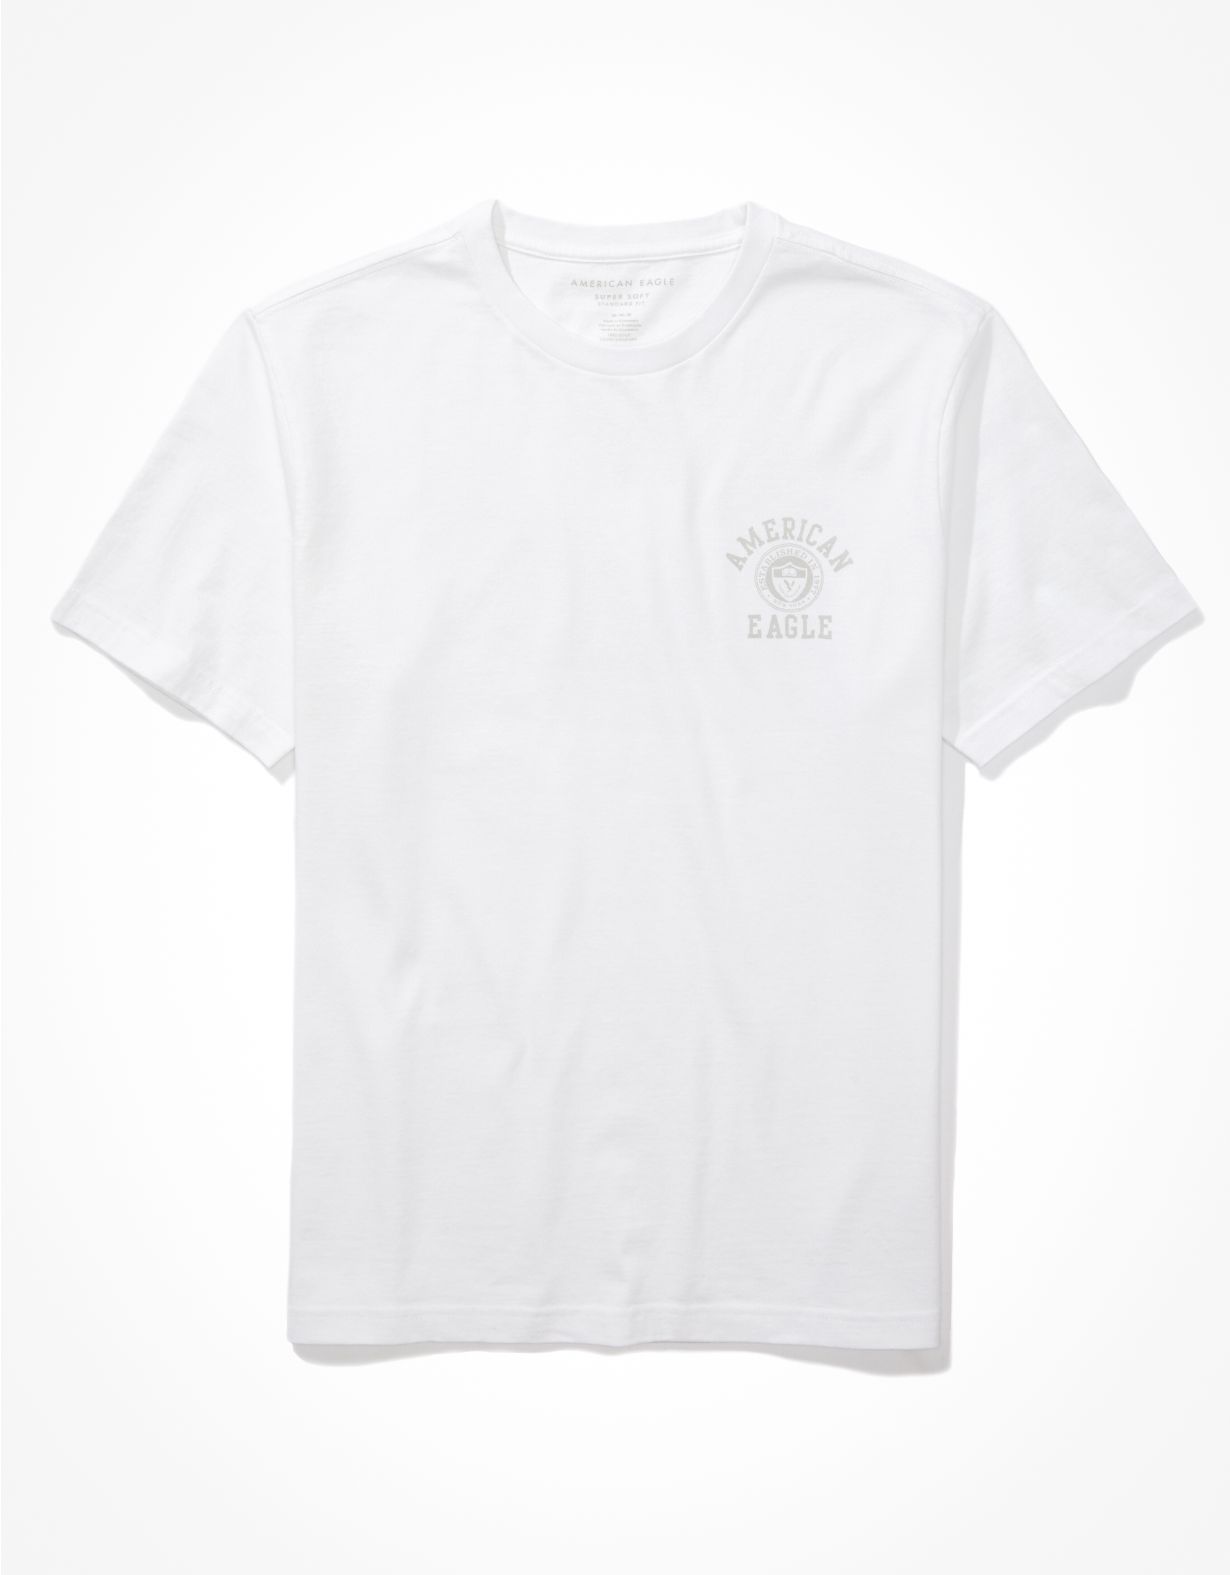 AE Super Soft Left Chest Graphic T-Shirt